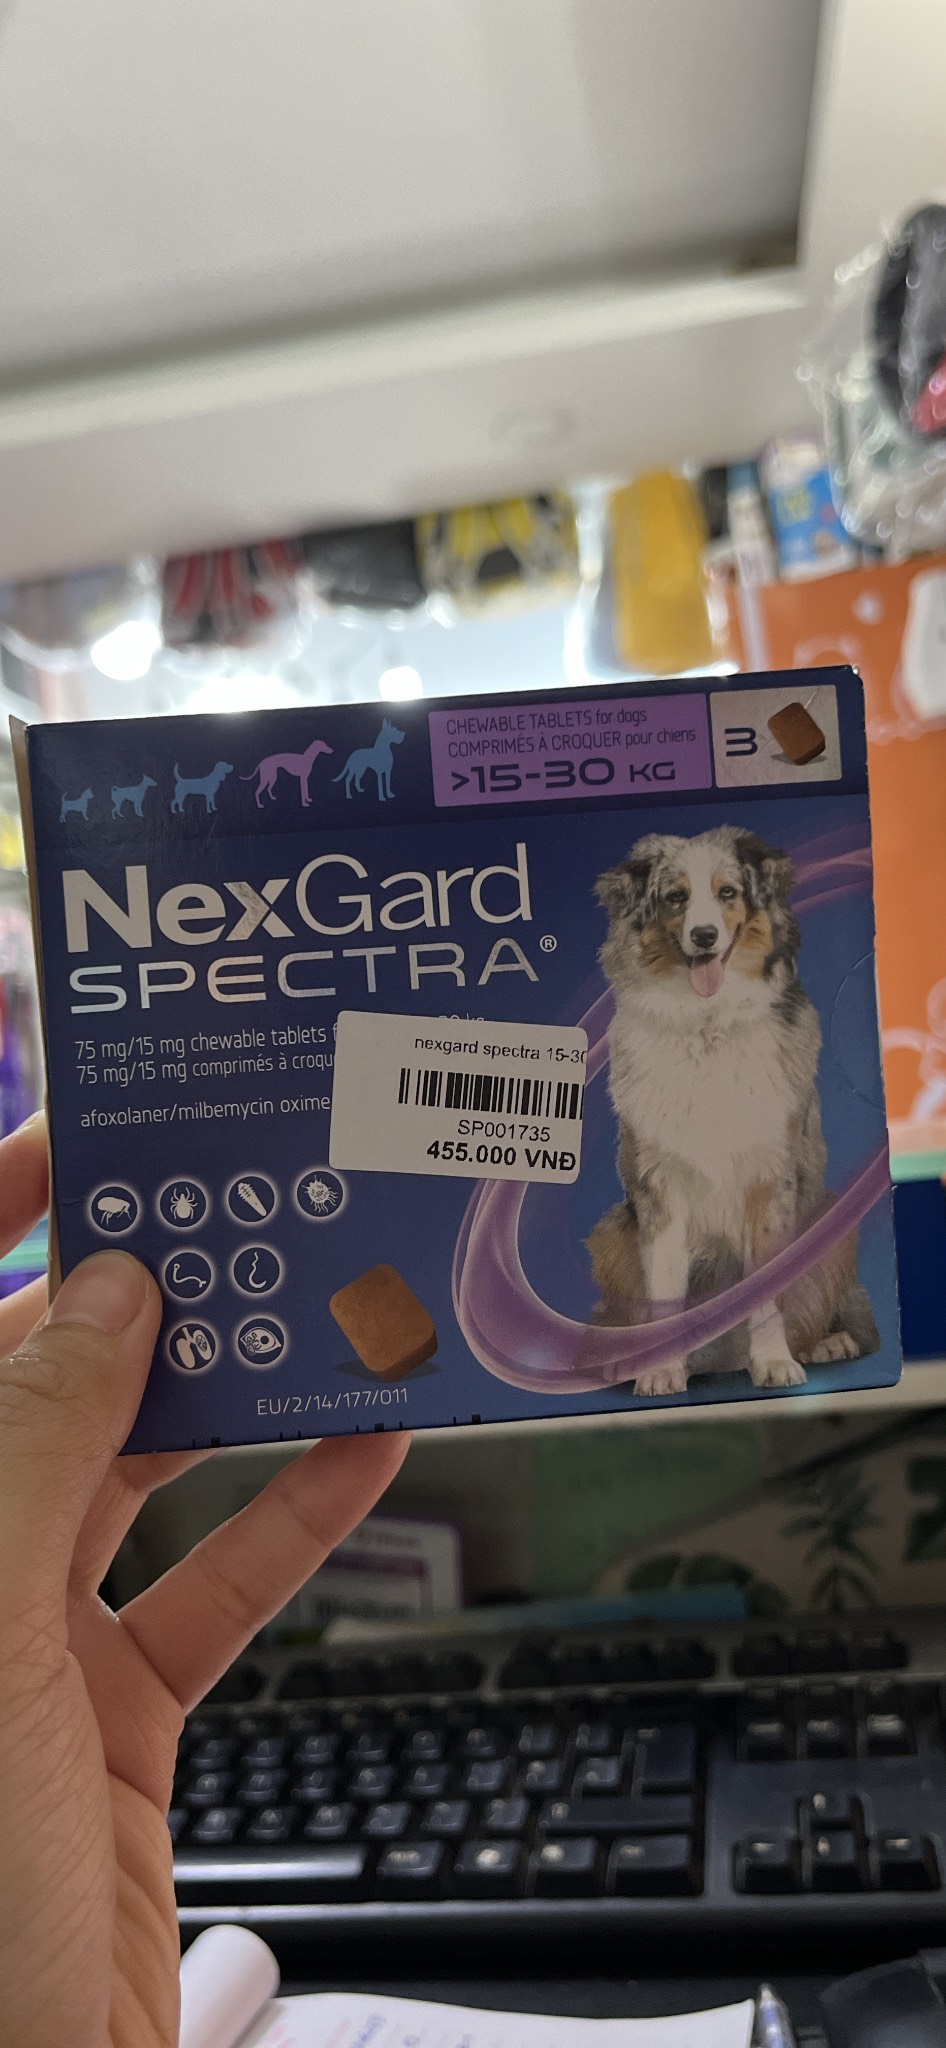 nexgard spectra 15-30kg